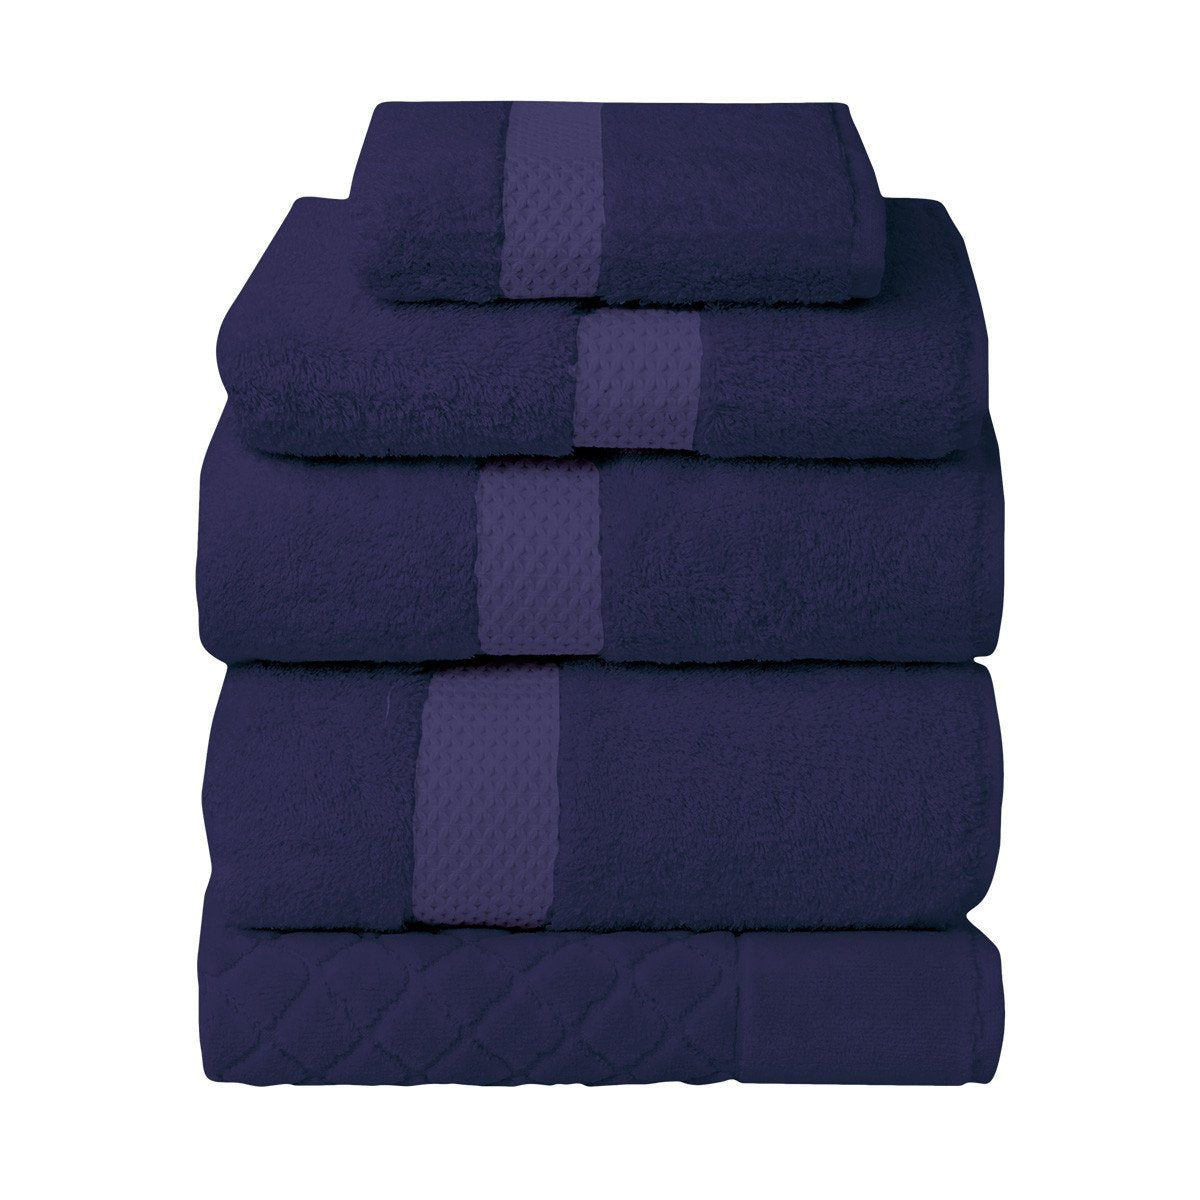 Etoile Bath Towels